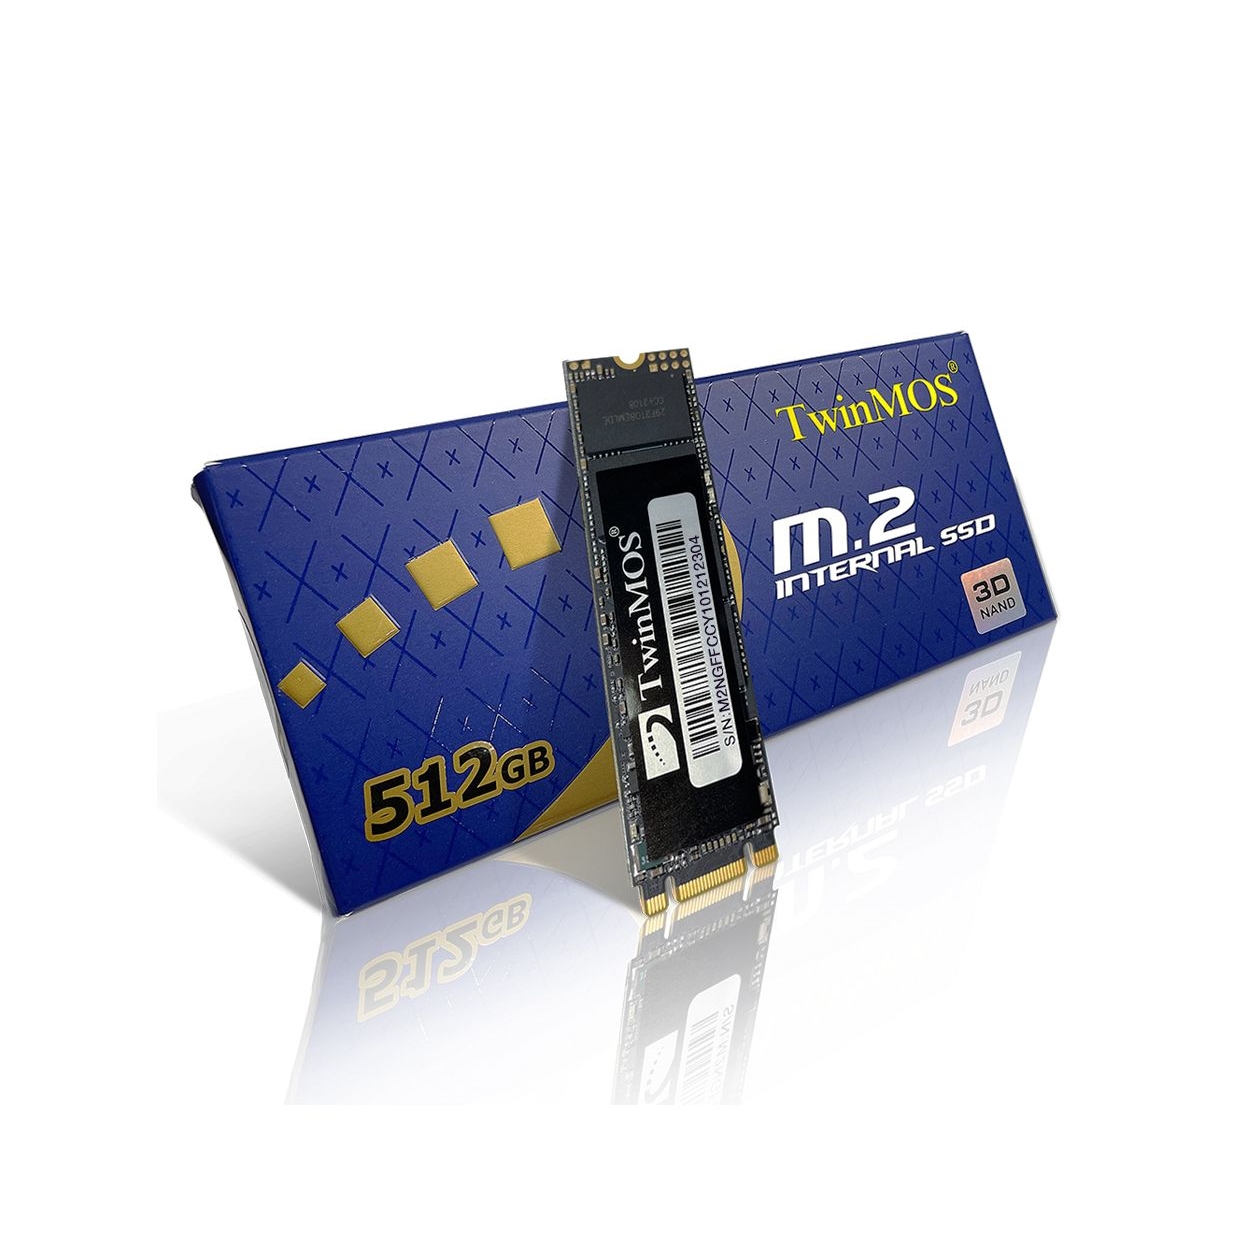 TWINMOS 512GB 580/550MB/s M2 SATA3 3D-NAND SSD NGFFFGBM2280